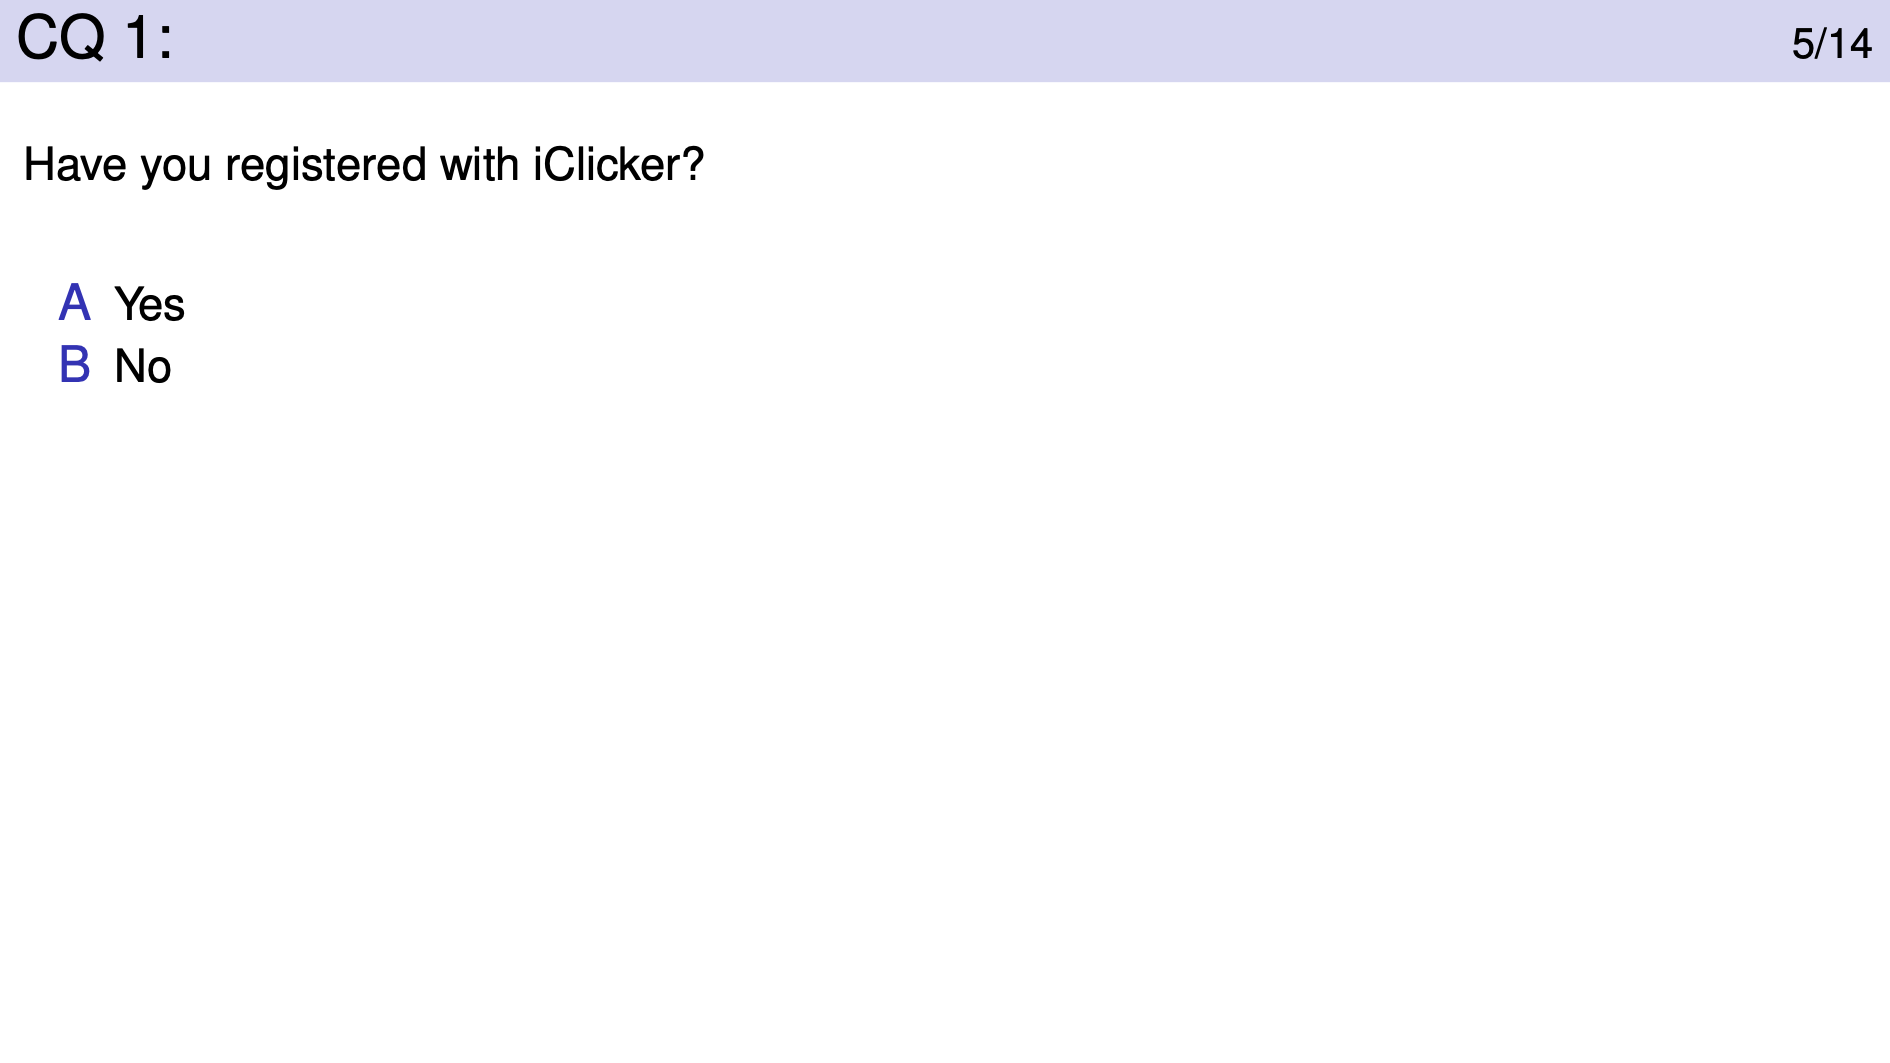 Clicker Question